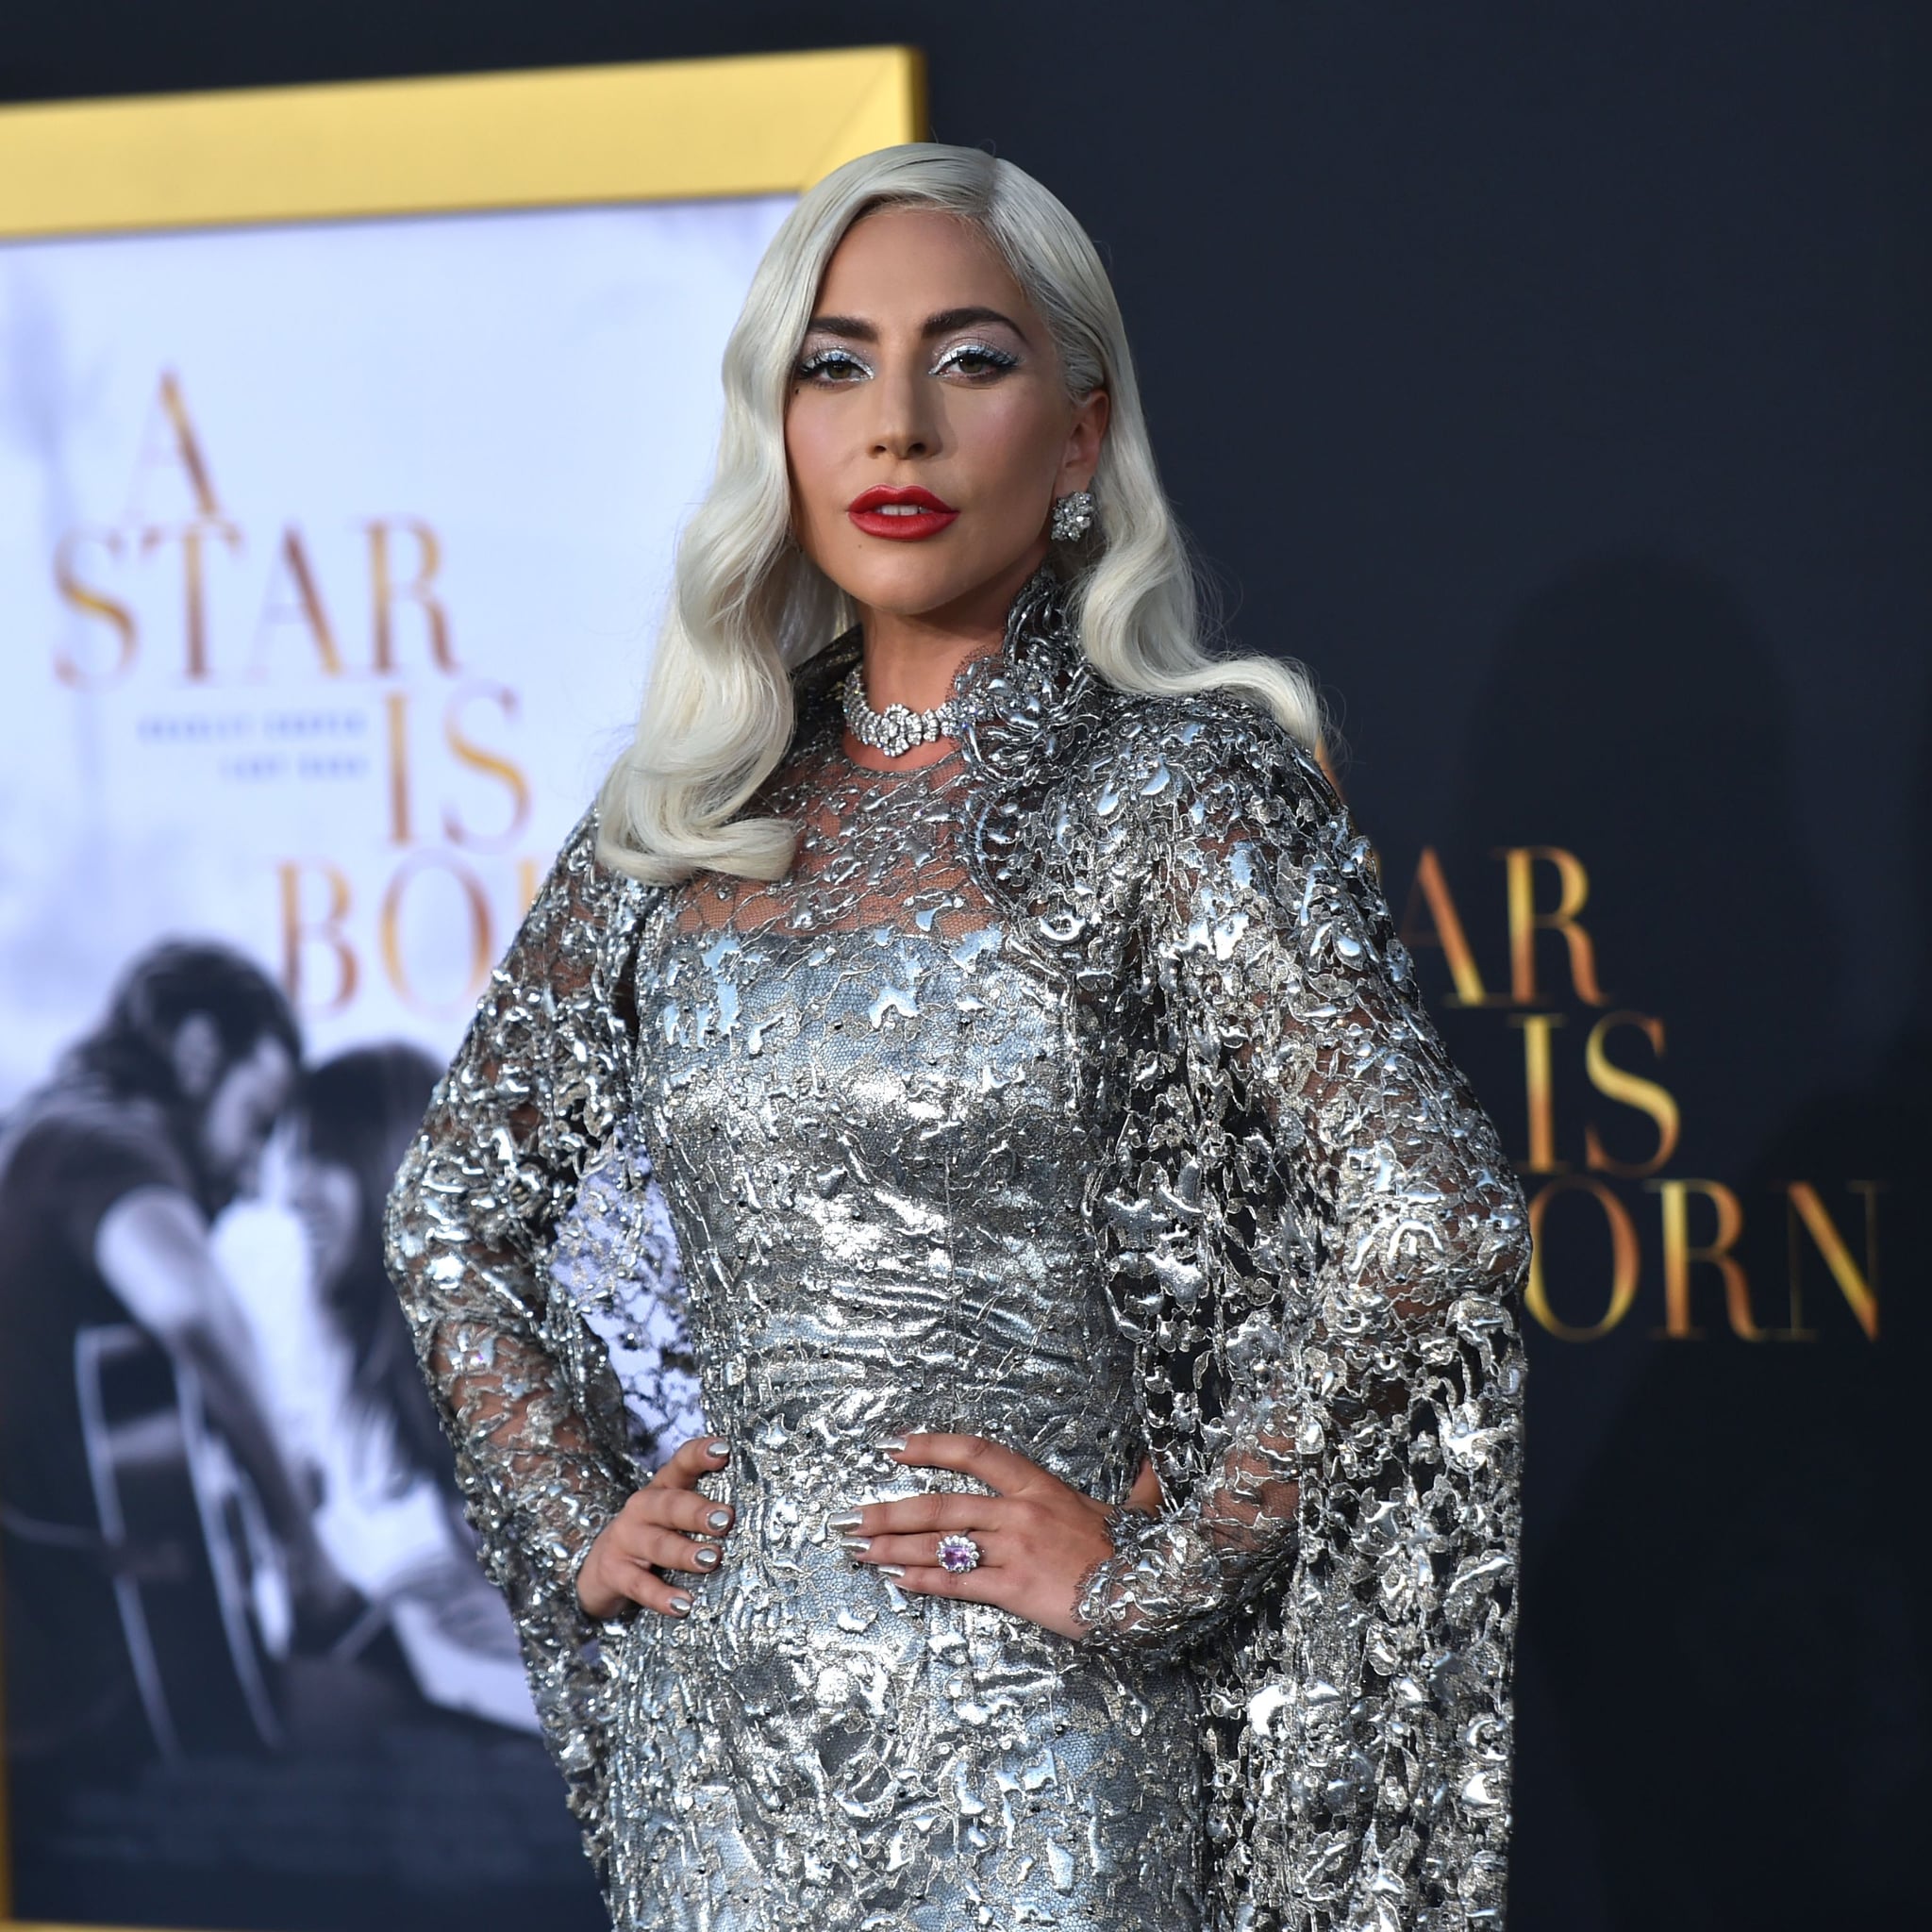 Gaga's Silver Dress Star Is Born Premiere Sept 2018 | POPSUGAR Fashion